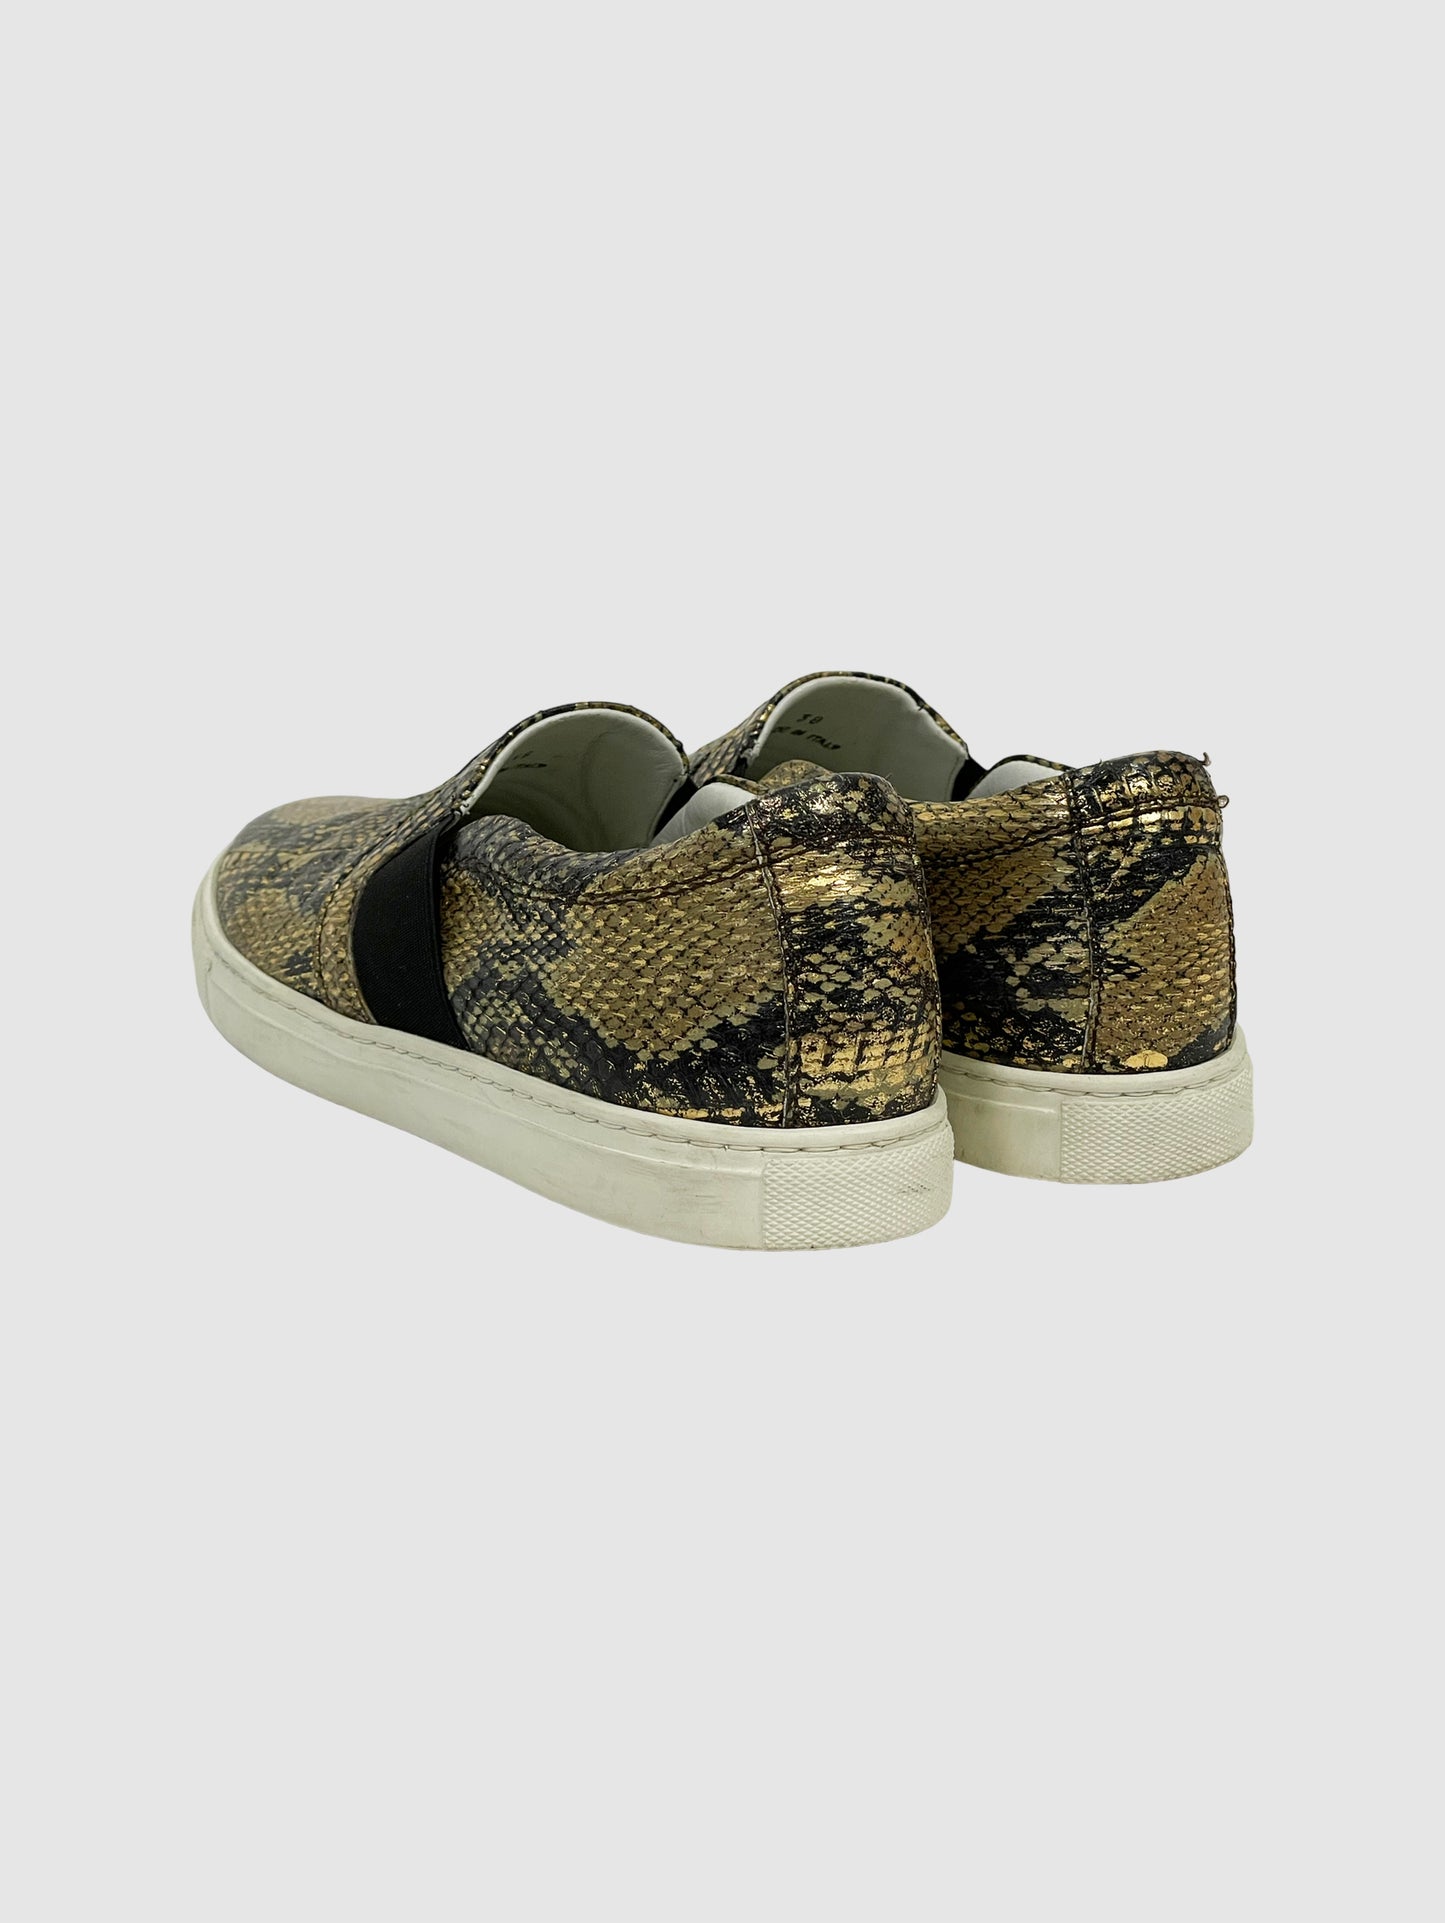 Lanvin Reptile Print Slip-On Sneakers - Size 38